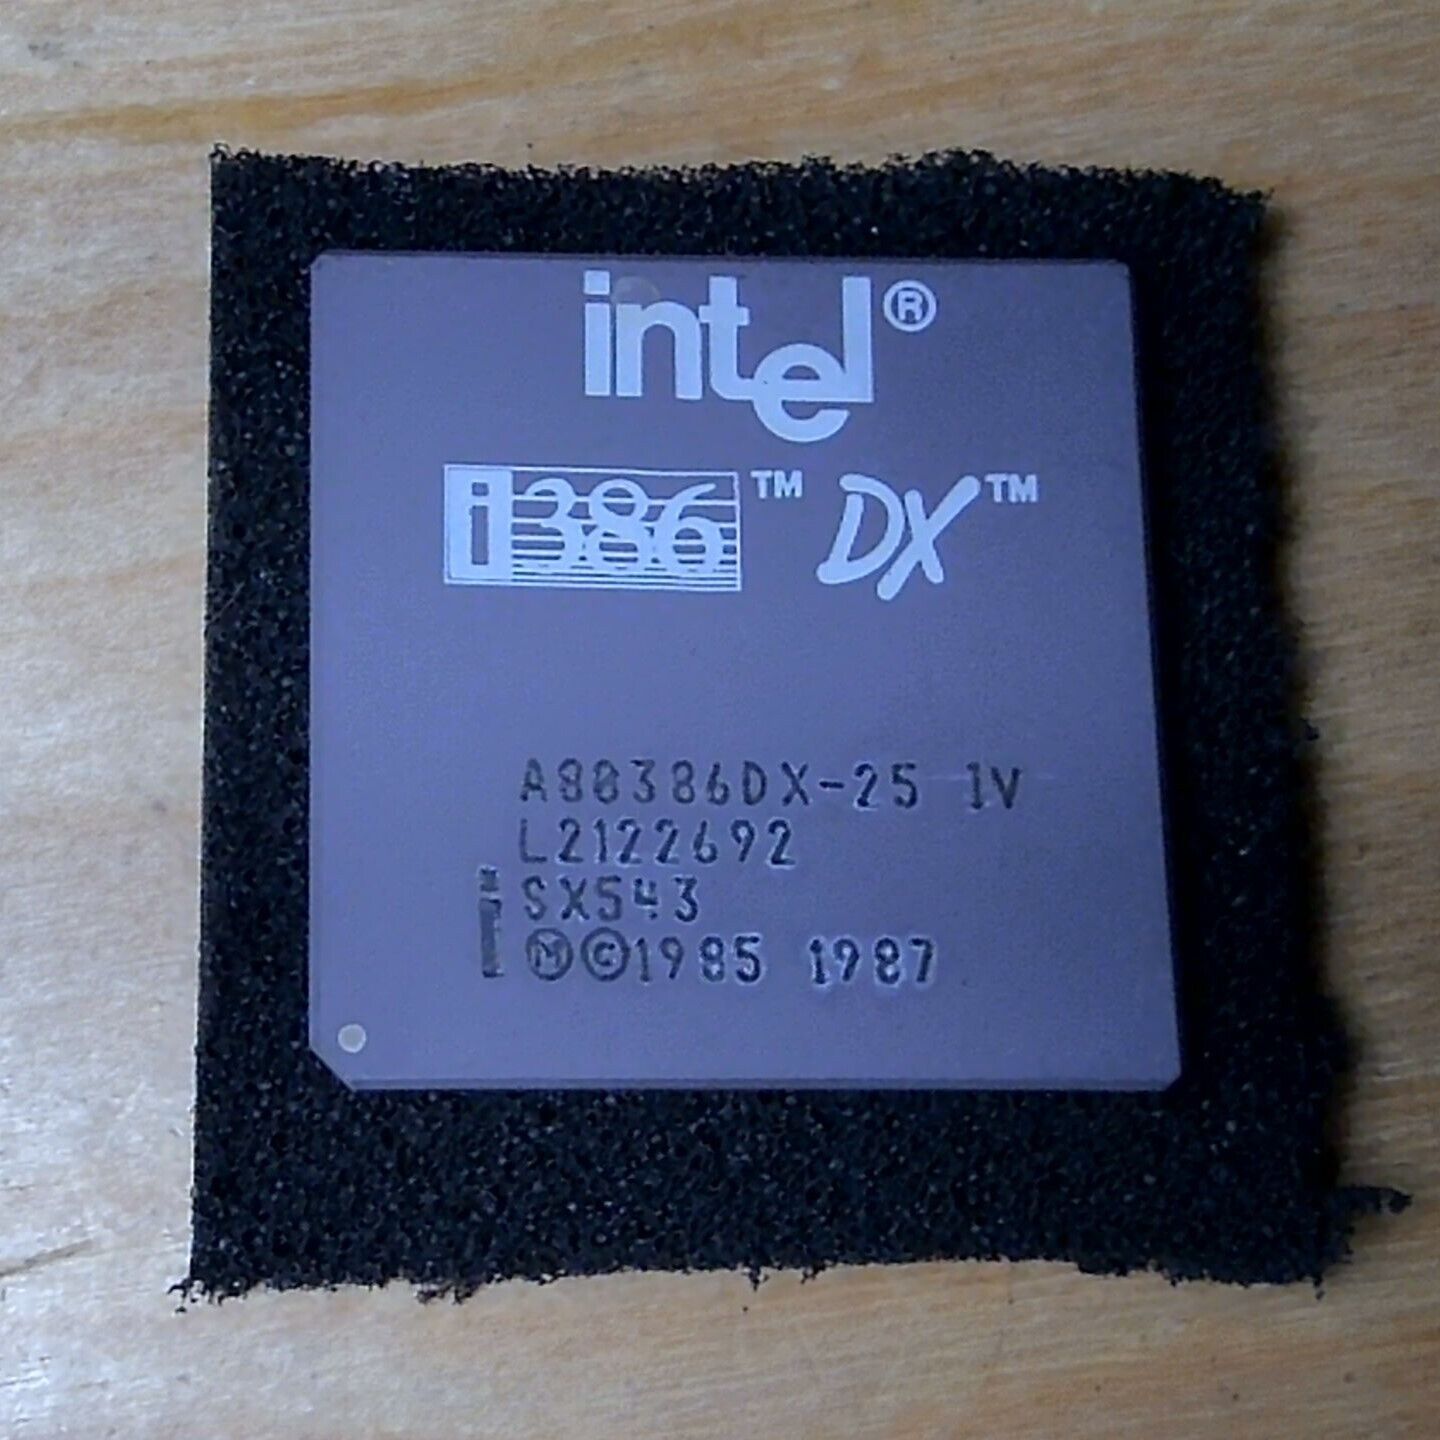 386DX Intel A80386DX-25 IV SX543 386 25Mhz vintage CPU GOLD